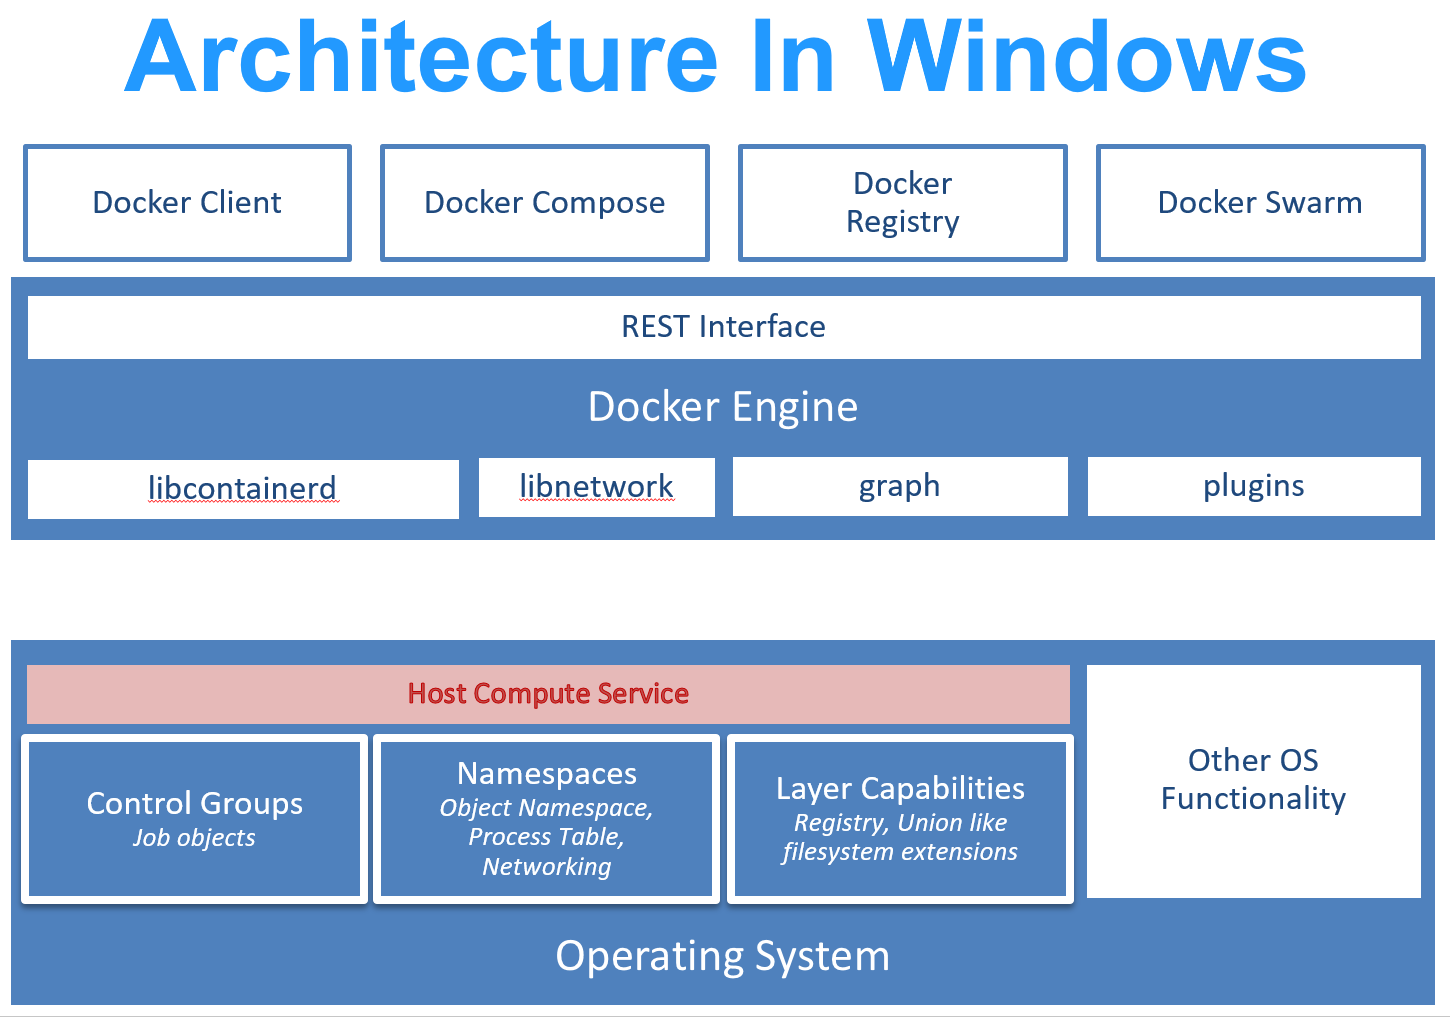 Initial Docker Engine architecture on Windows